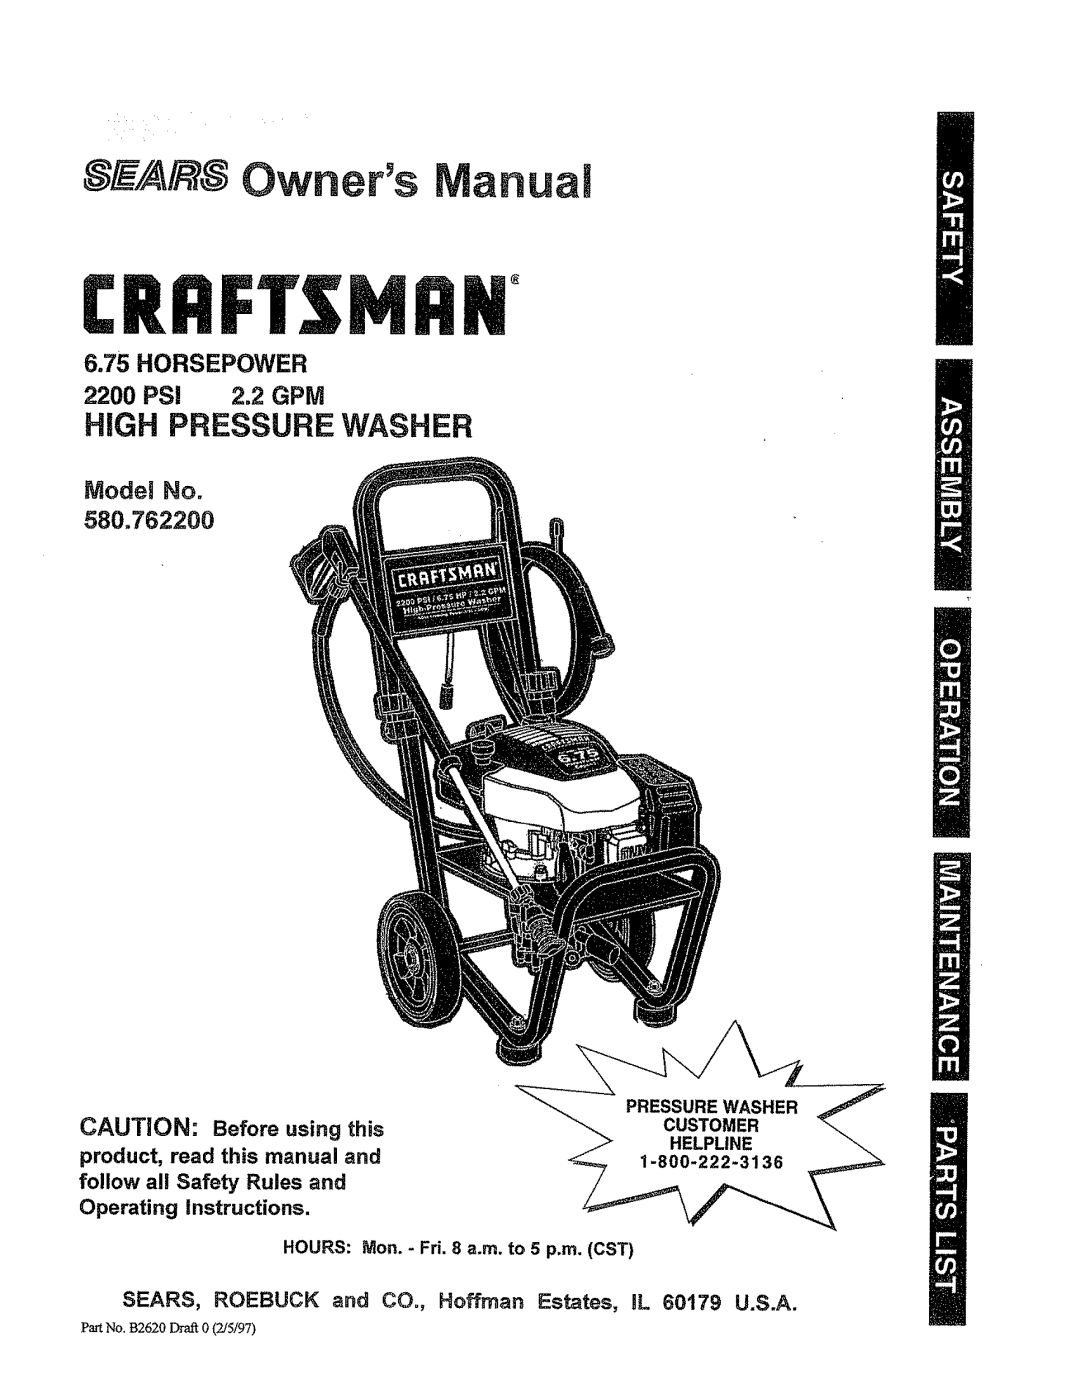 Craftsman 580.7622 manual CRAFr$1vlnN+, Owners anual, HiGH PRESSURE WASHER, Part No. B2620 DraI_ 0 2/5197 